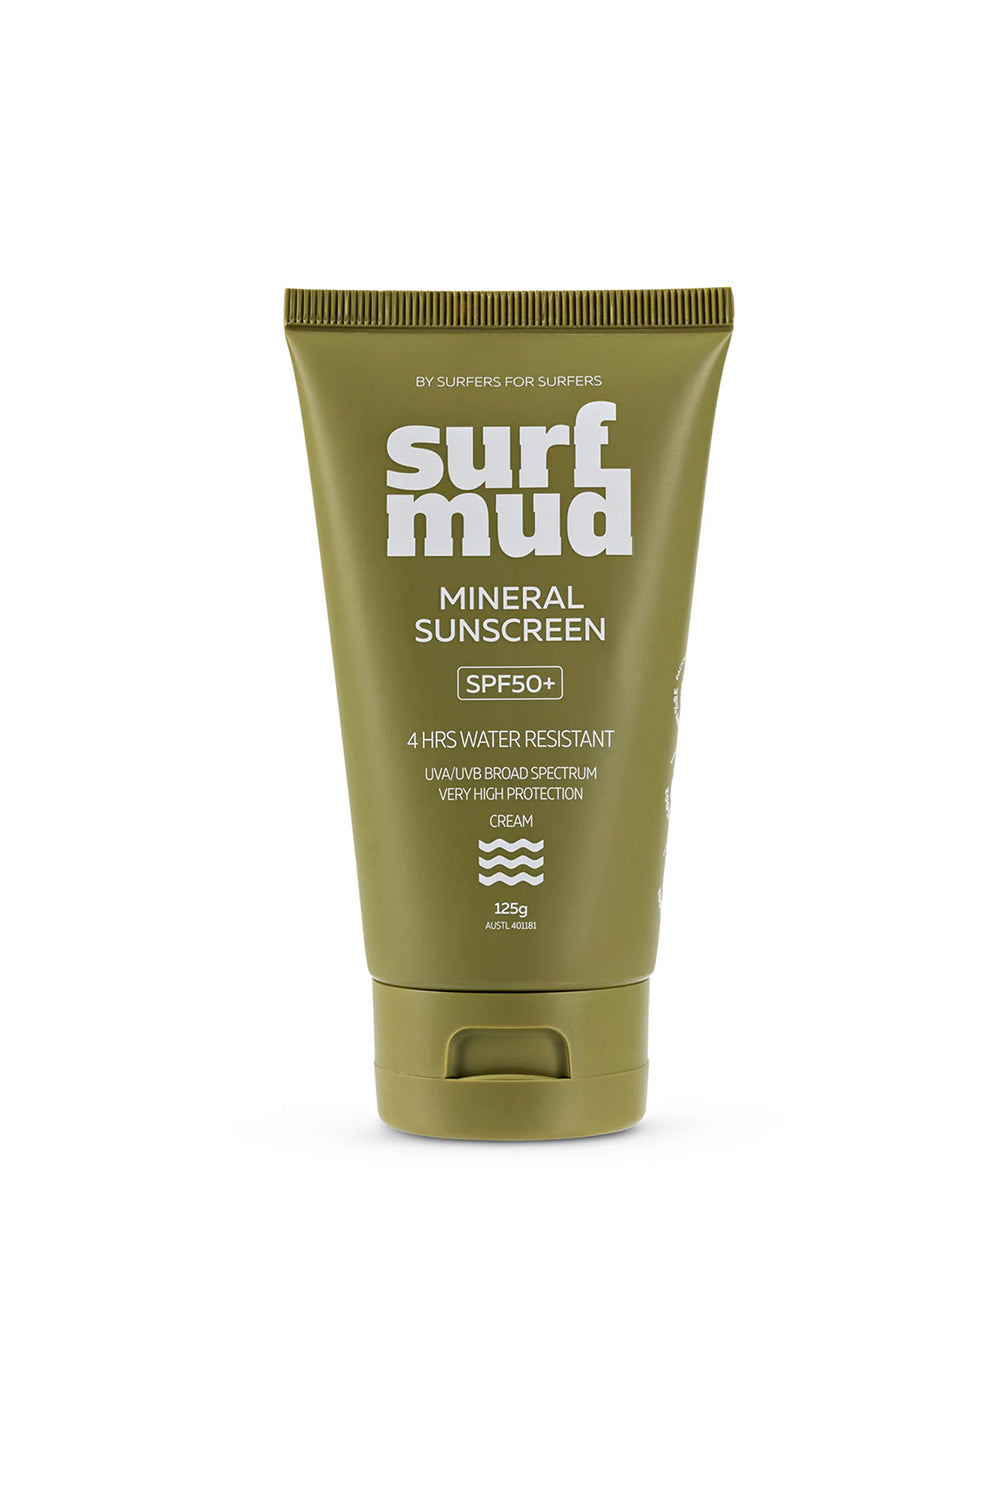 Surfmud Mineral Sunscreen SPF 50 125g